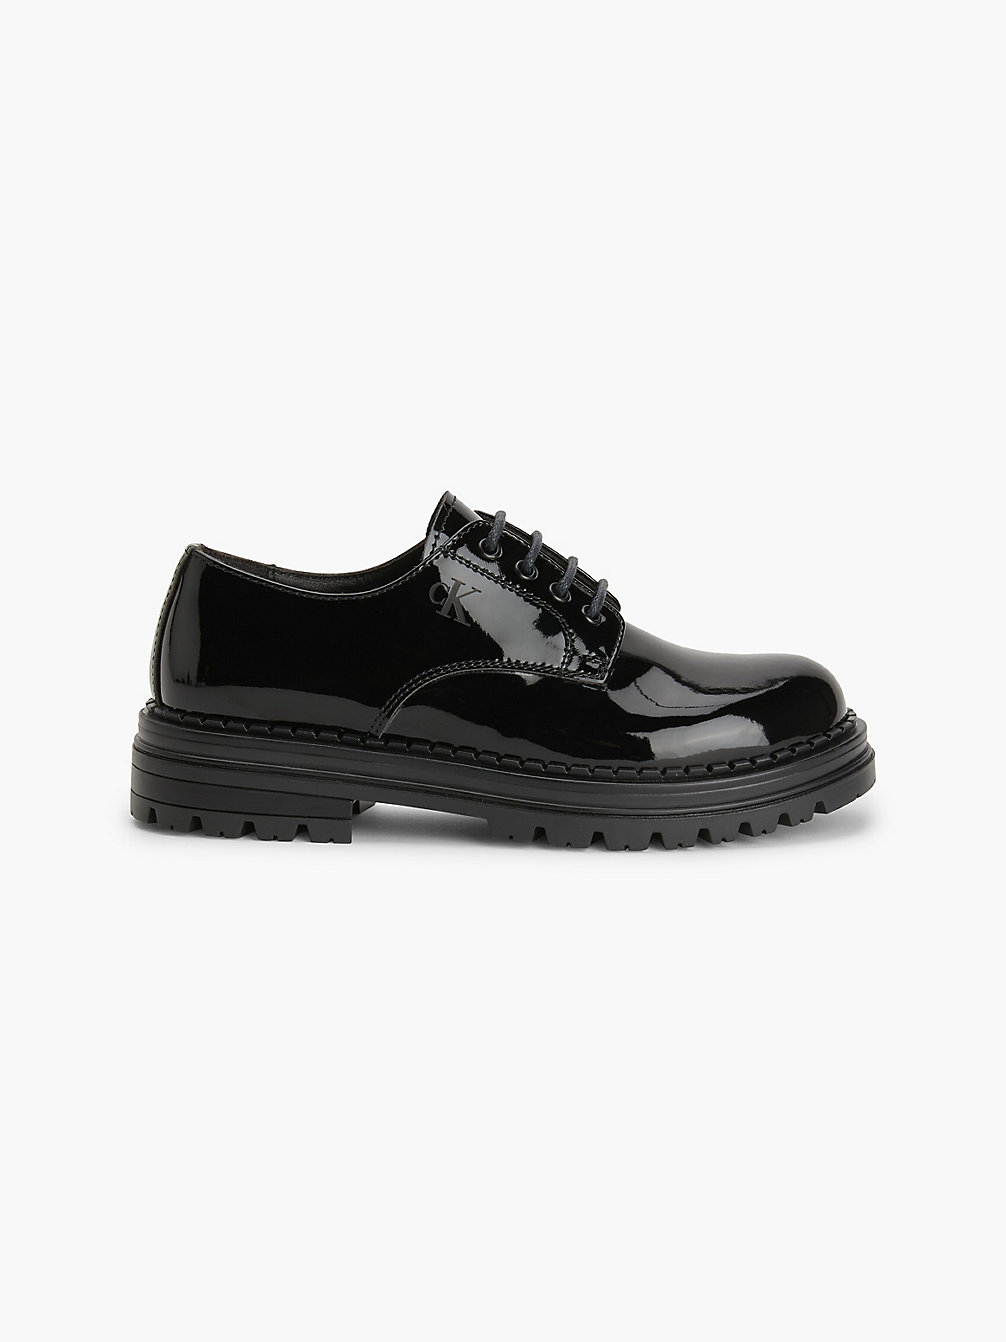 BLACK Faux Patent Leather Kids Lace-Up Shoes undefined kids unisex Calvin Klein